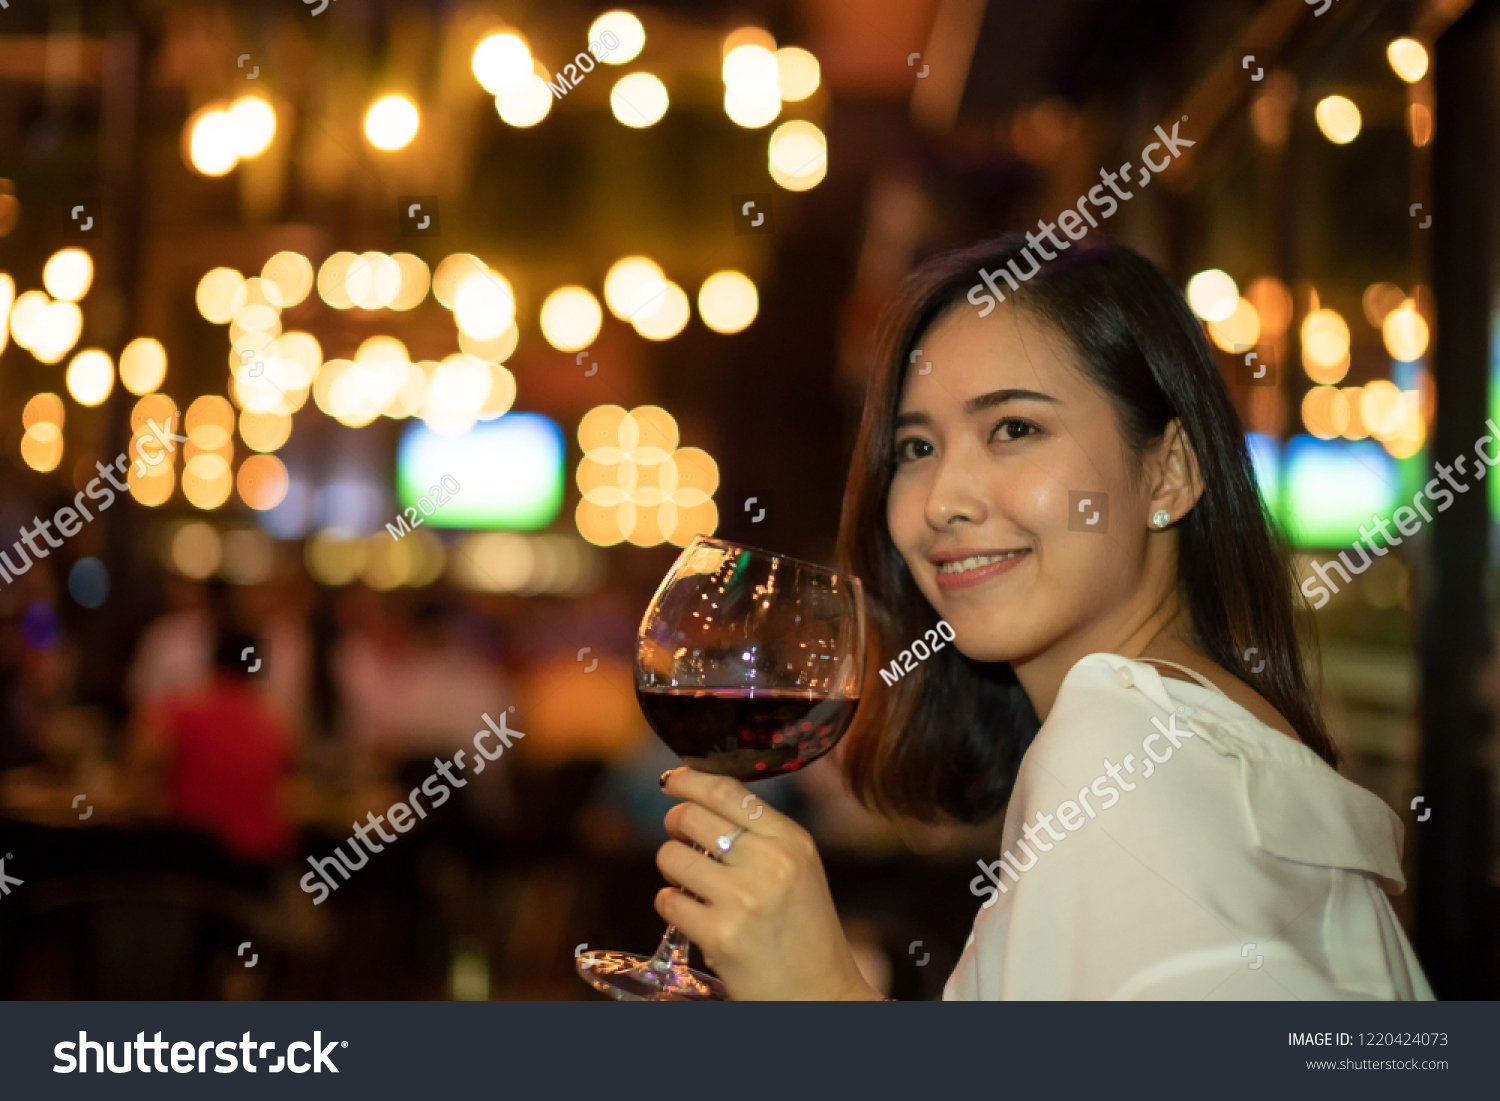 Asian women Enjoying Dinner at Home,Enjoy Concept,Woman drink wine in a nightclub or bar. #1220424073